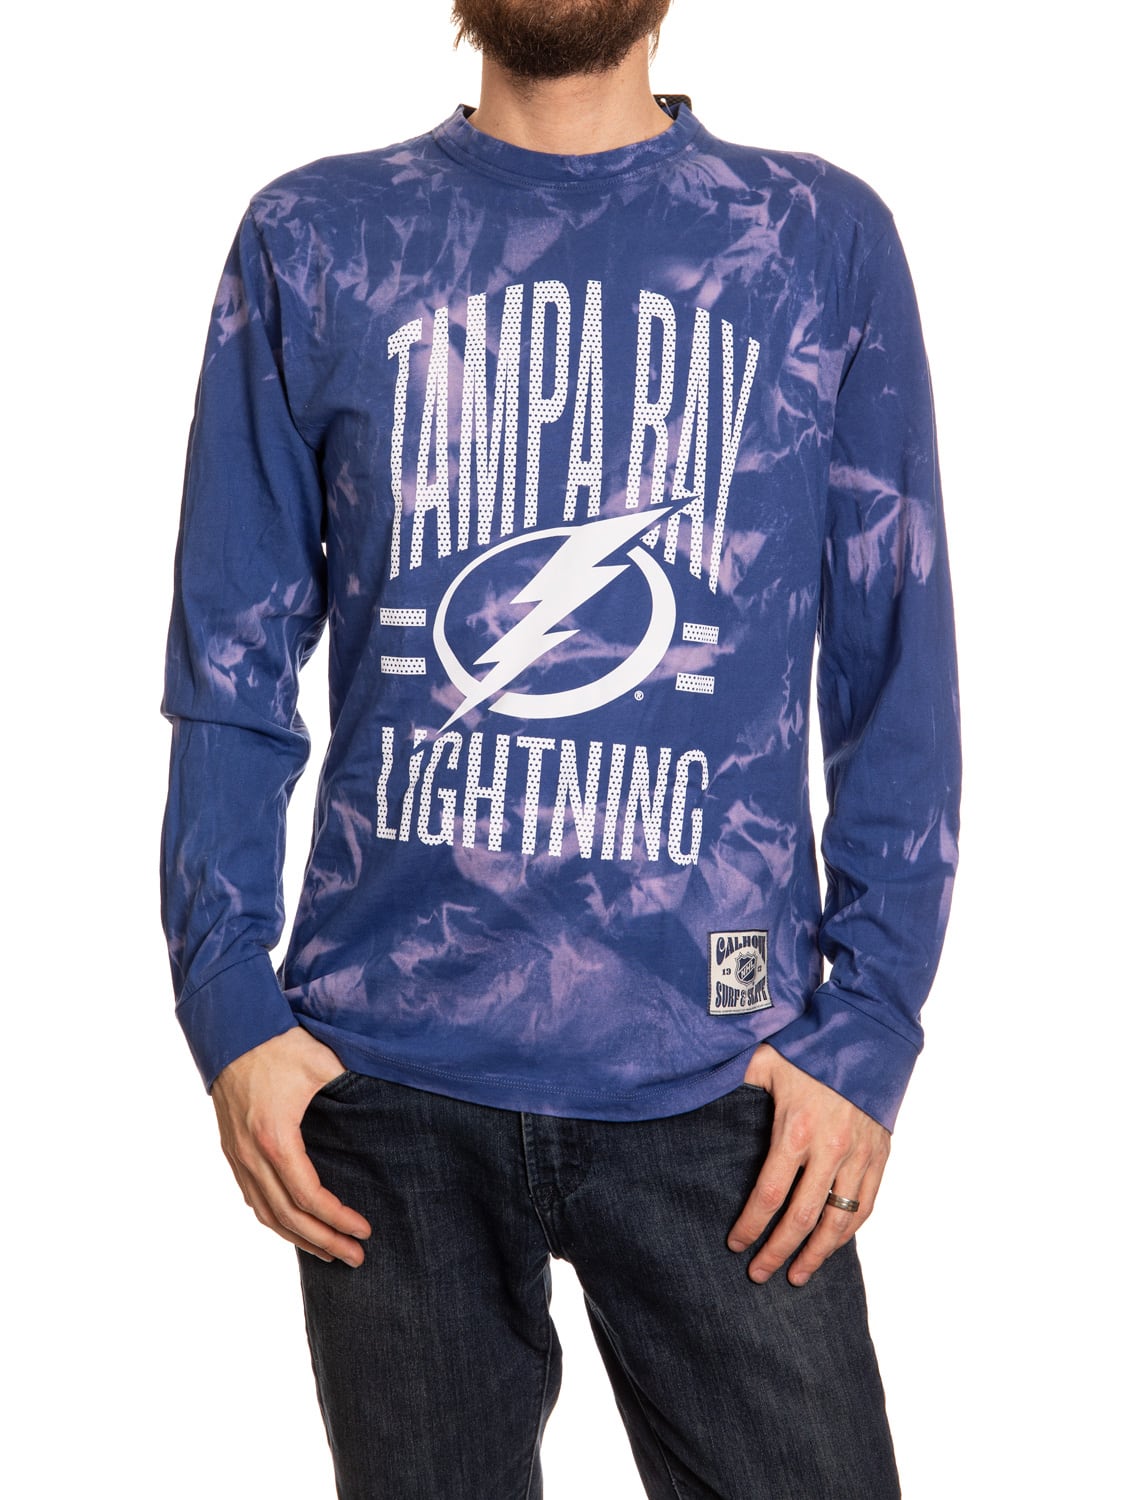 Tampa Bay Lightning Crystal Tie Dye Long Sleeve Shirt